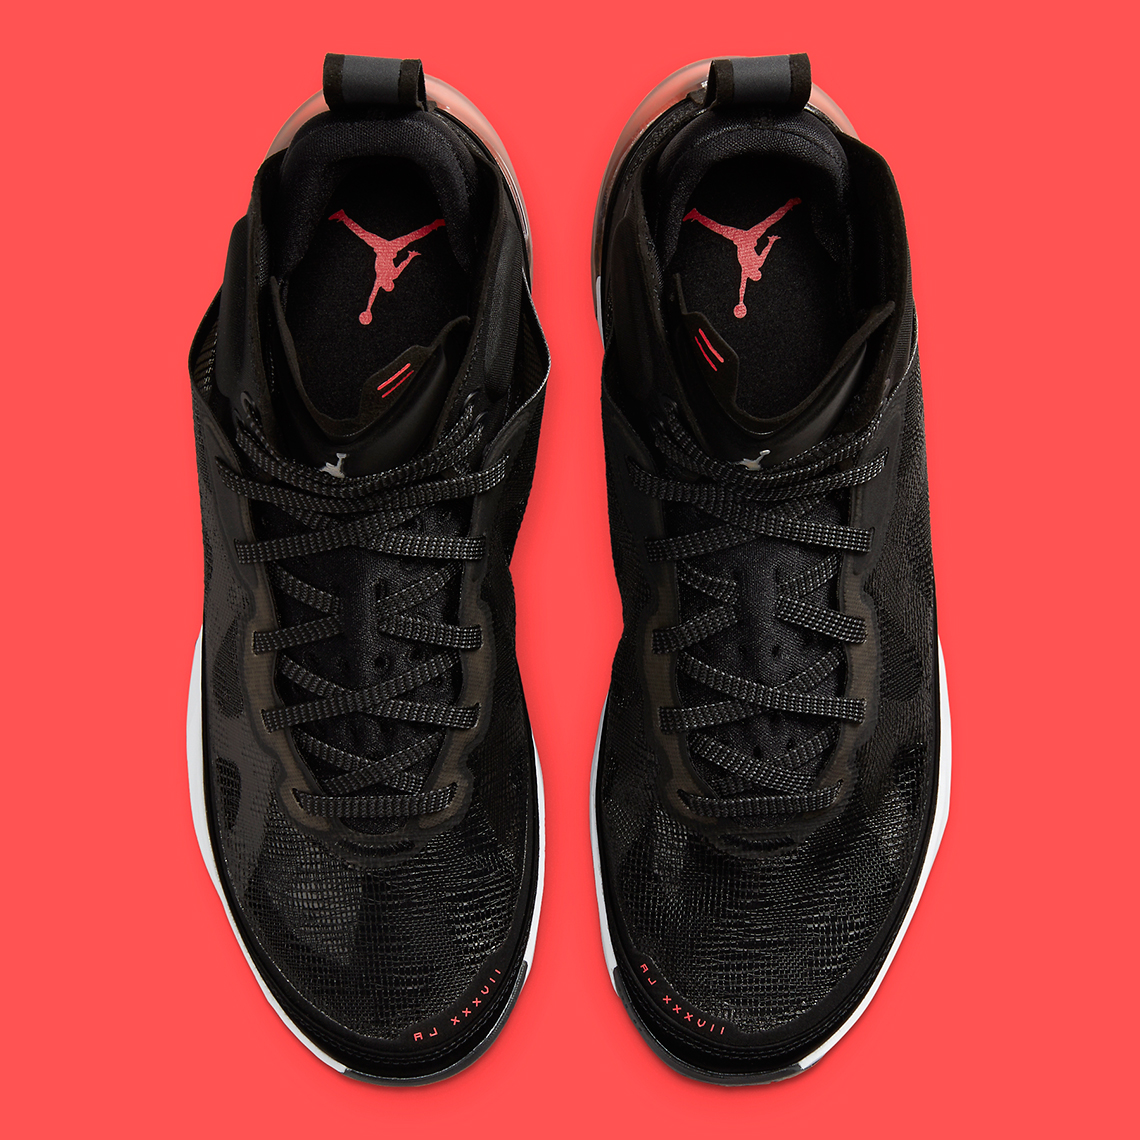 Air Jordan 5 Royal Laney Sneaker shirt Black Infrared Dd6958 091 1